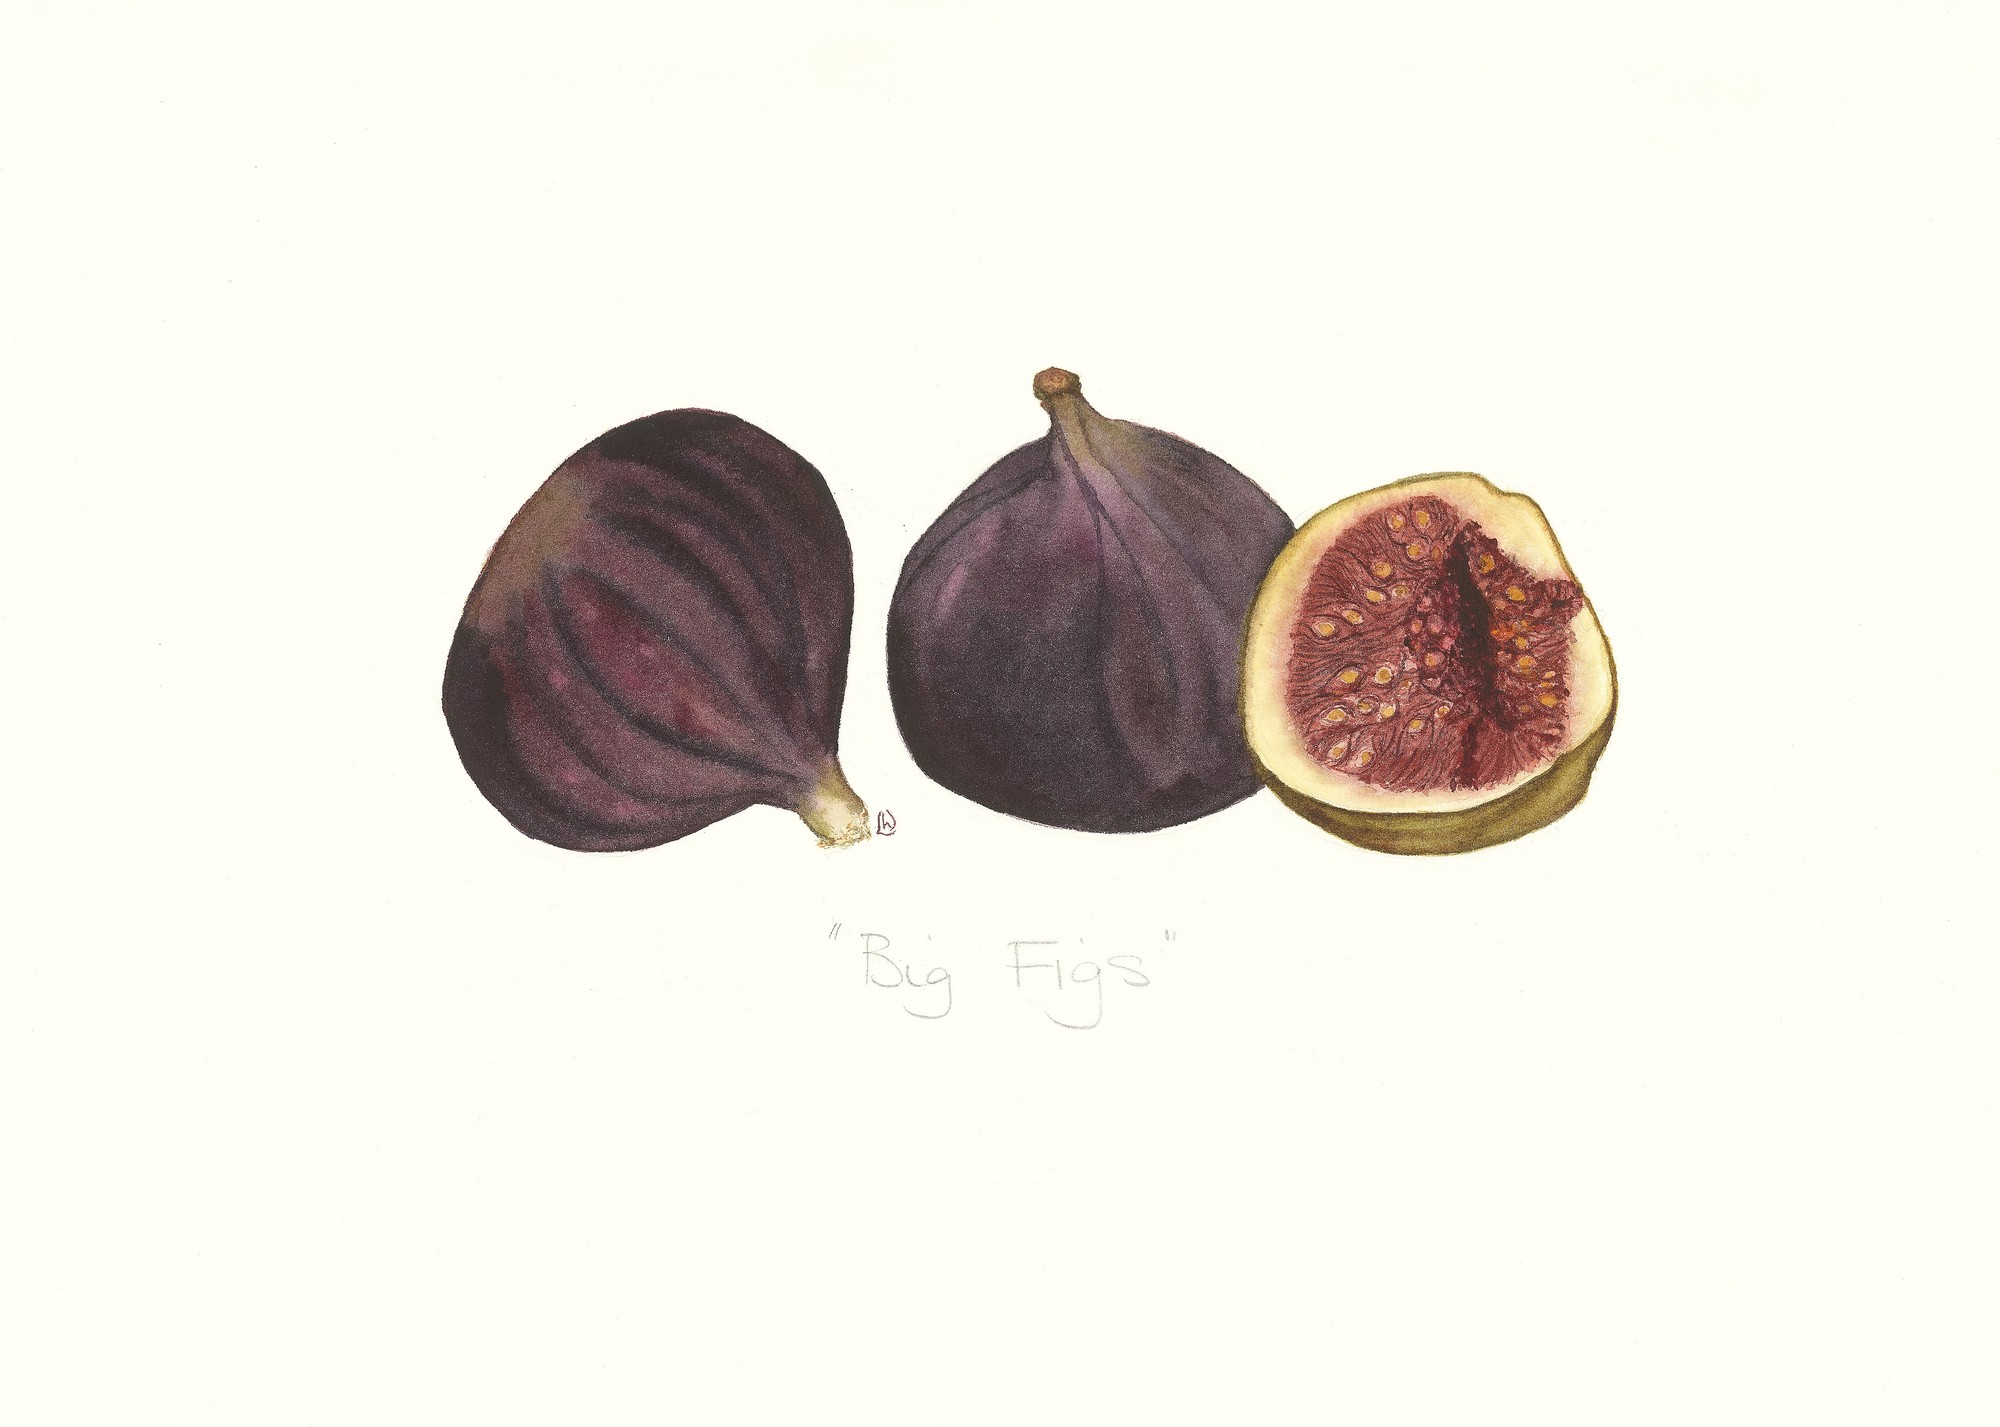 Big Figs, 2012